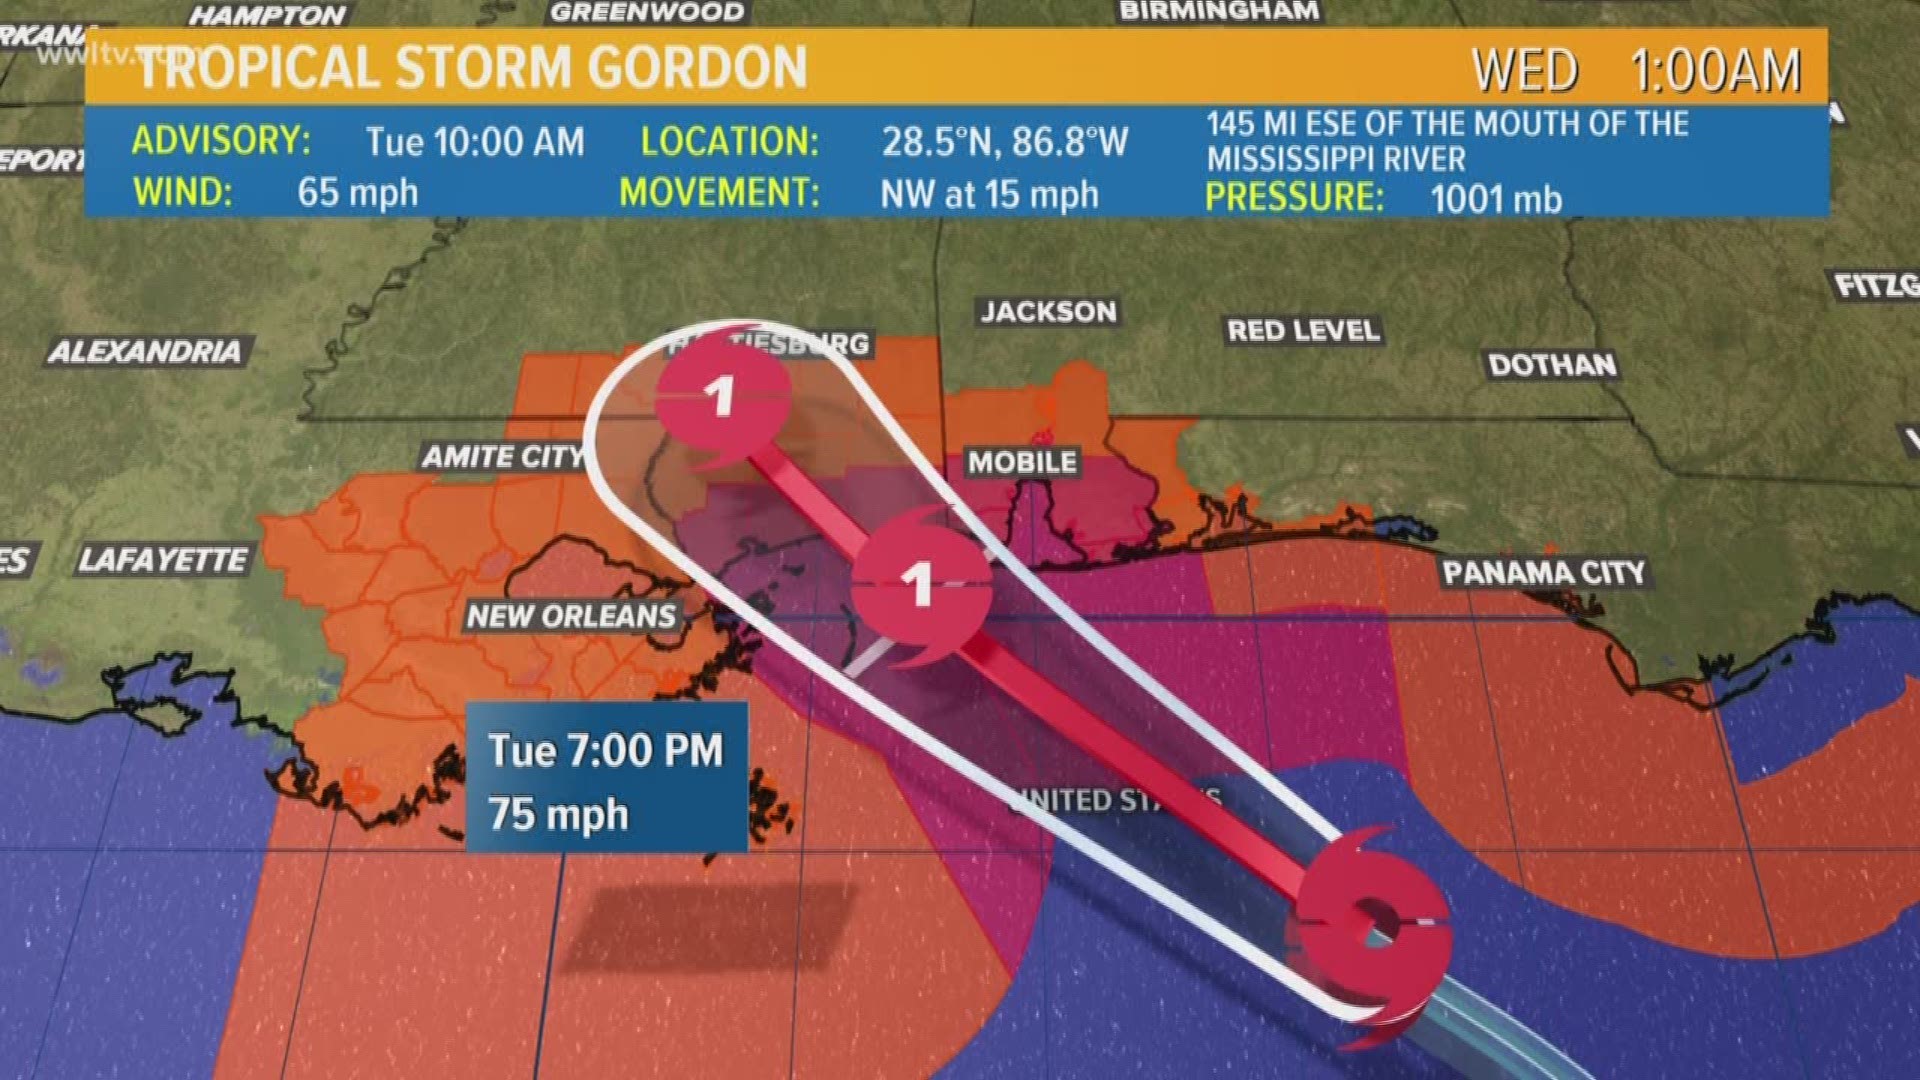 10 AM Update on Tropical Storm Gordon 9-4-18